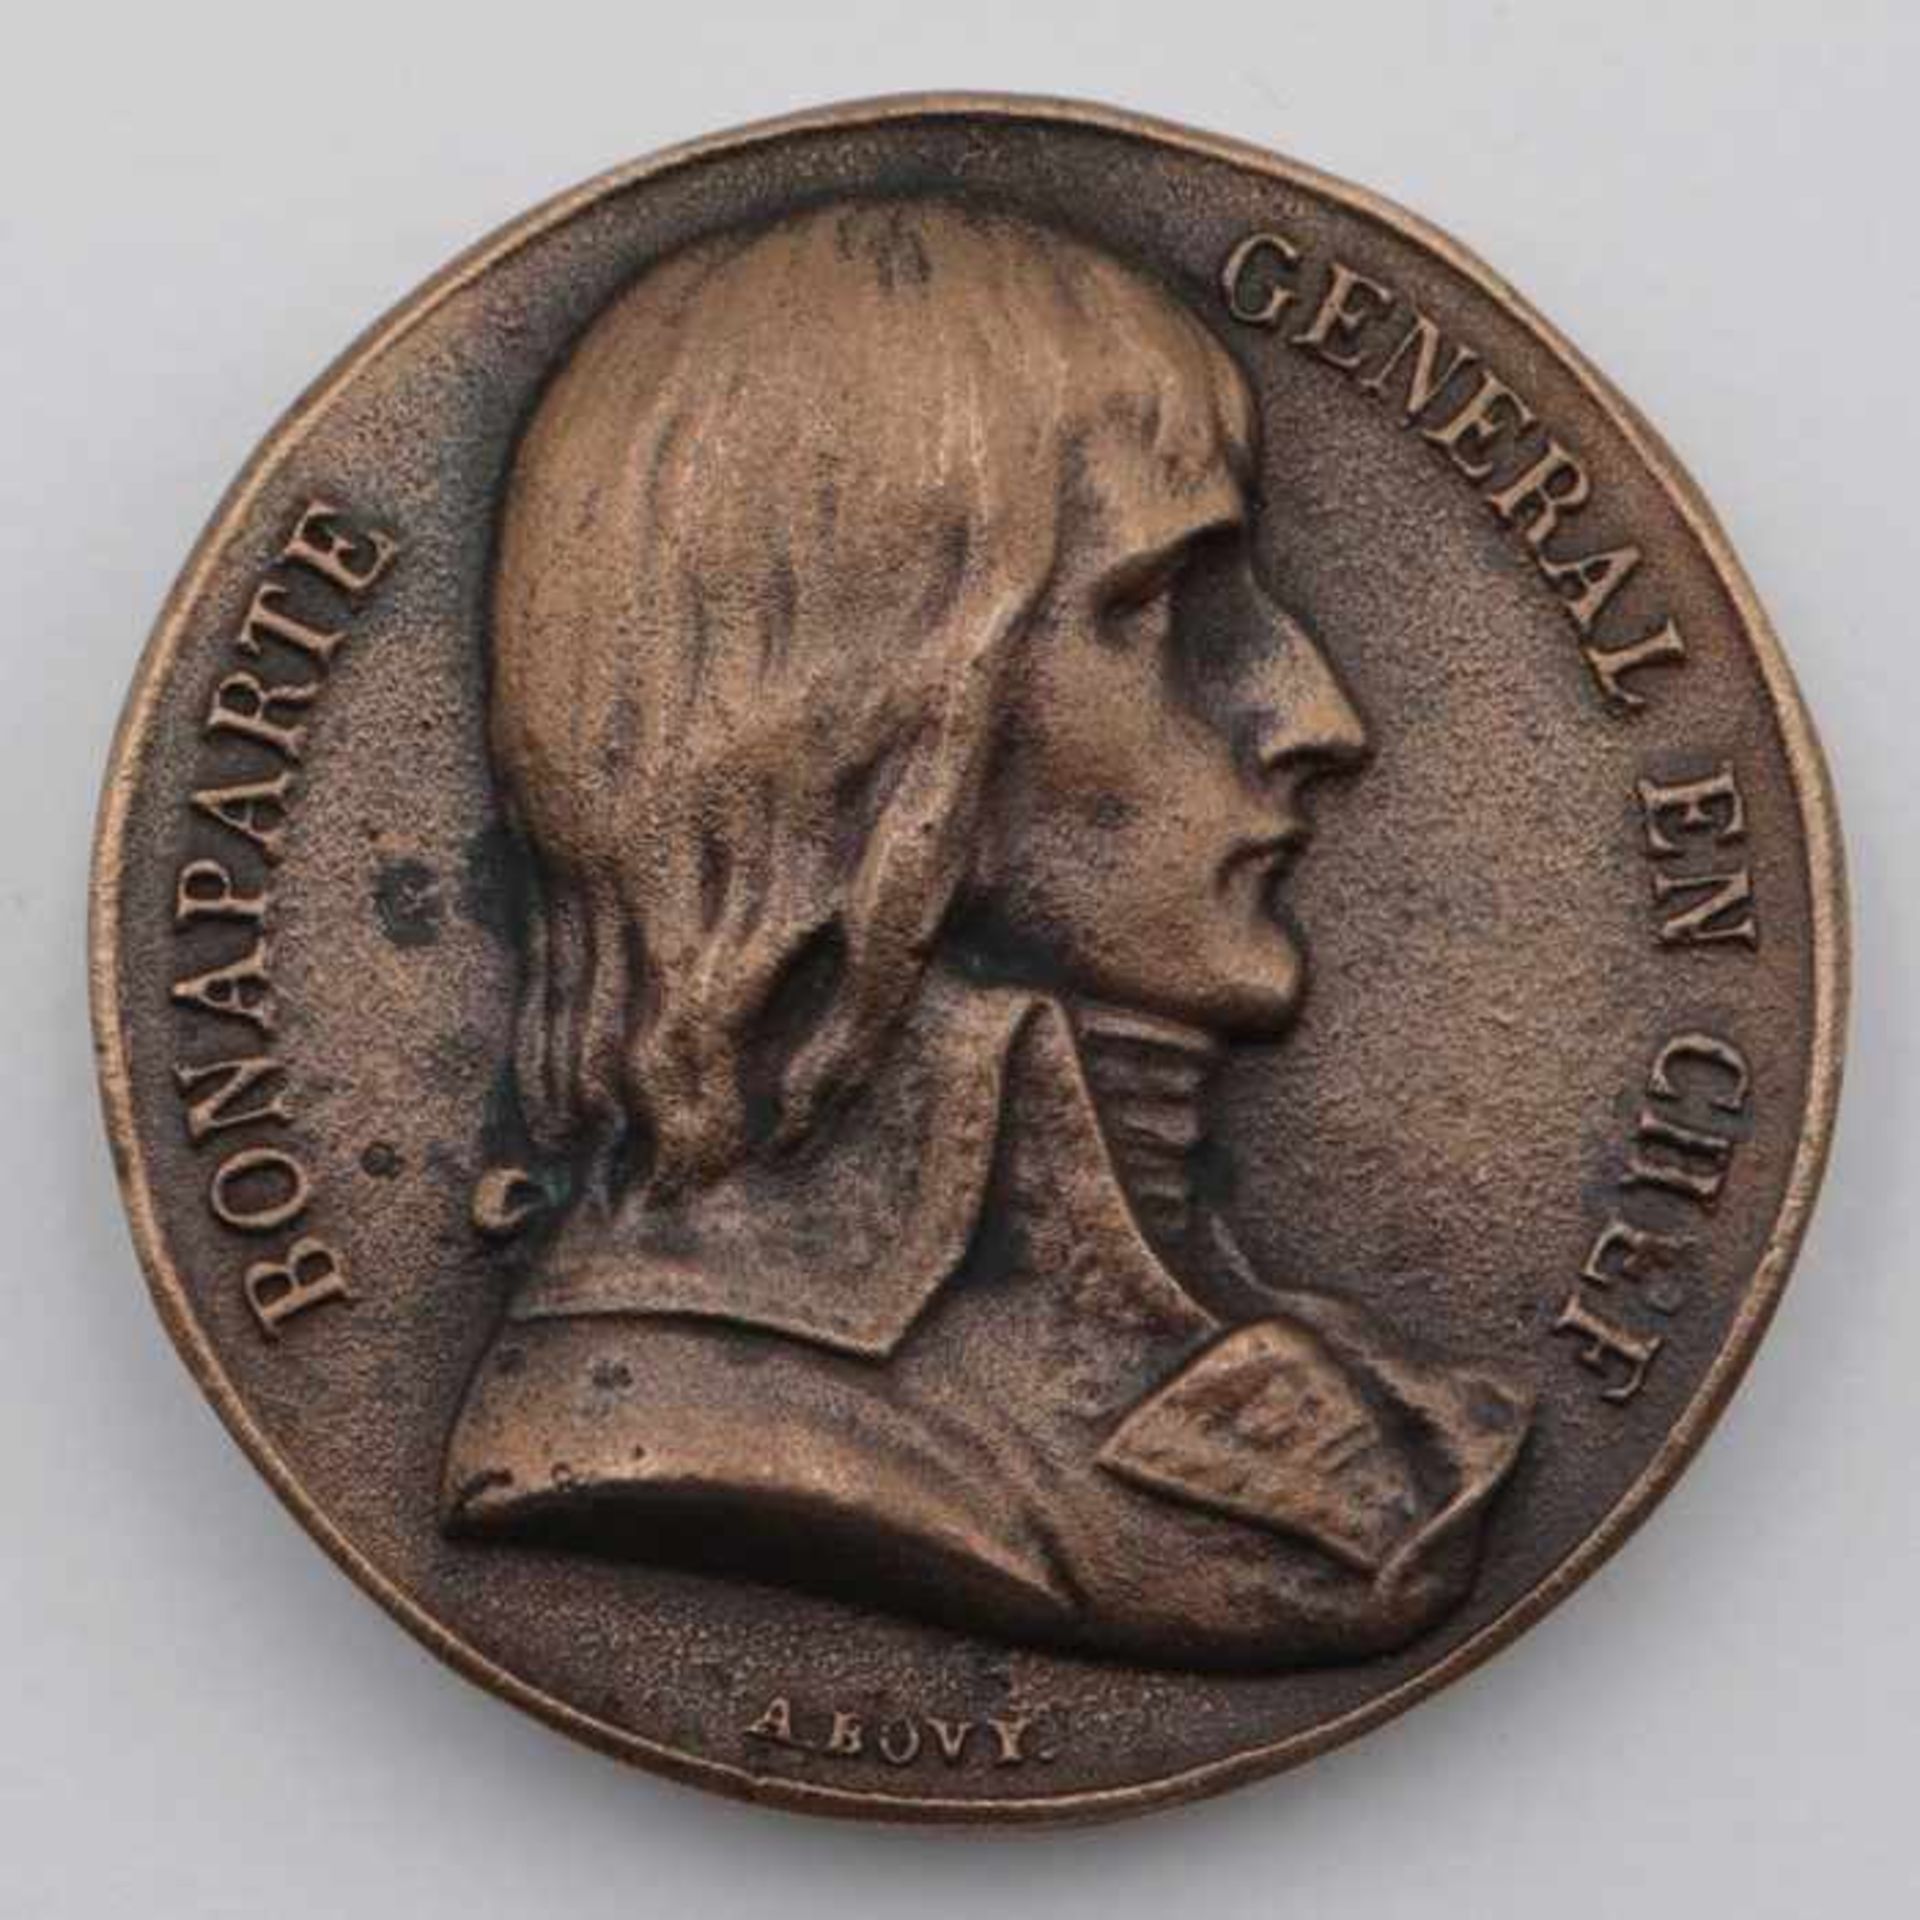 Medaille FrankreichBonaparte General en Chef, Bronze, D 4 cm- - -20.00 % buyer's premium on the